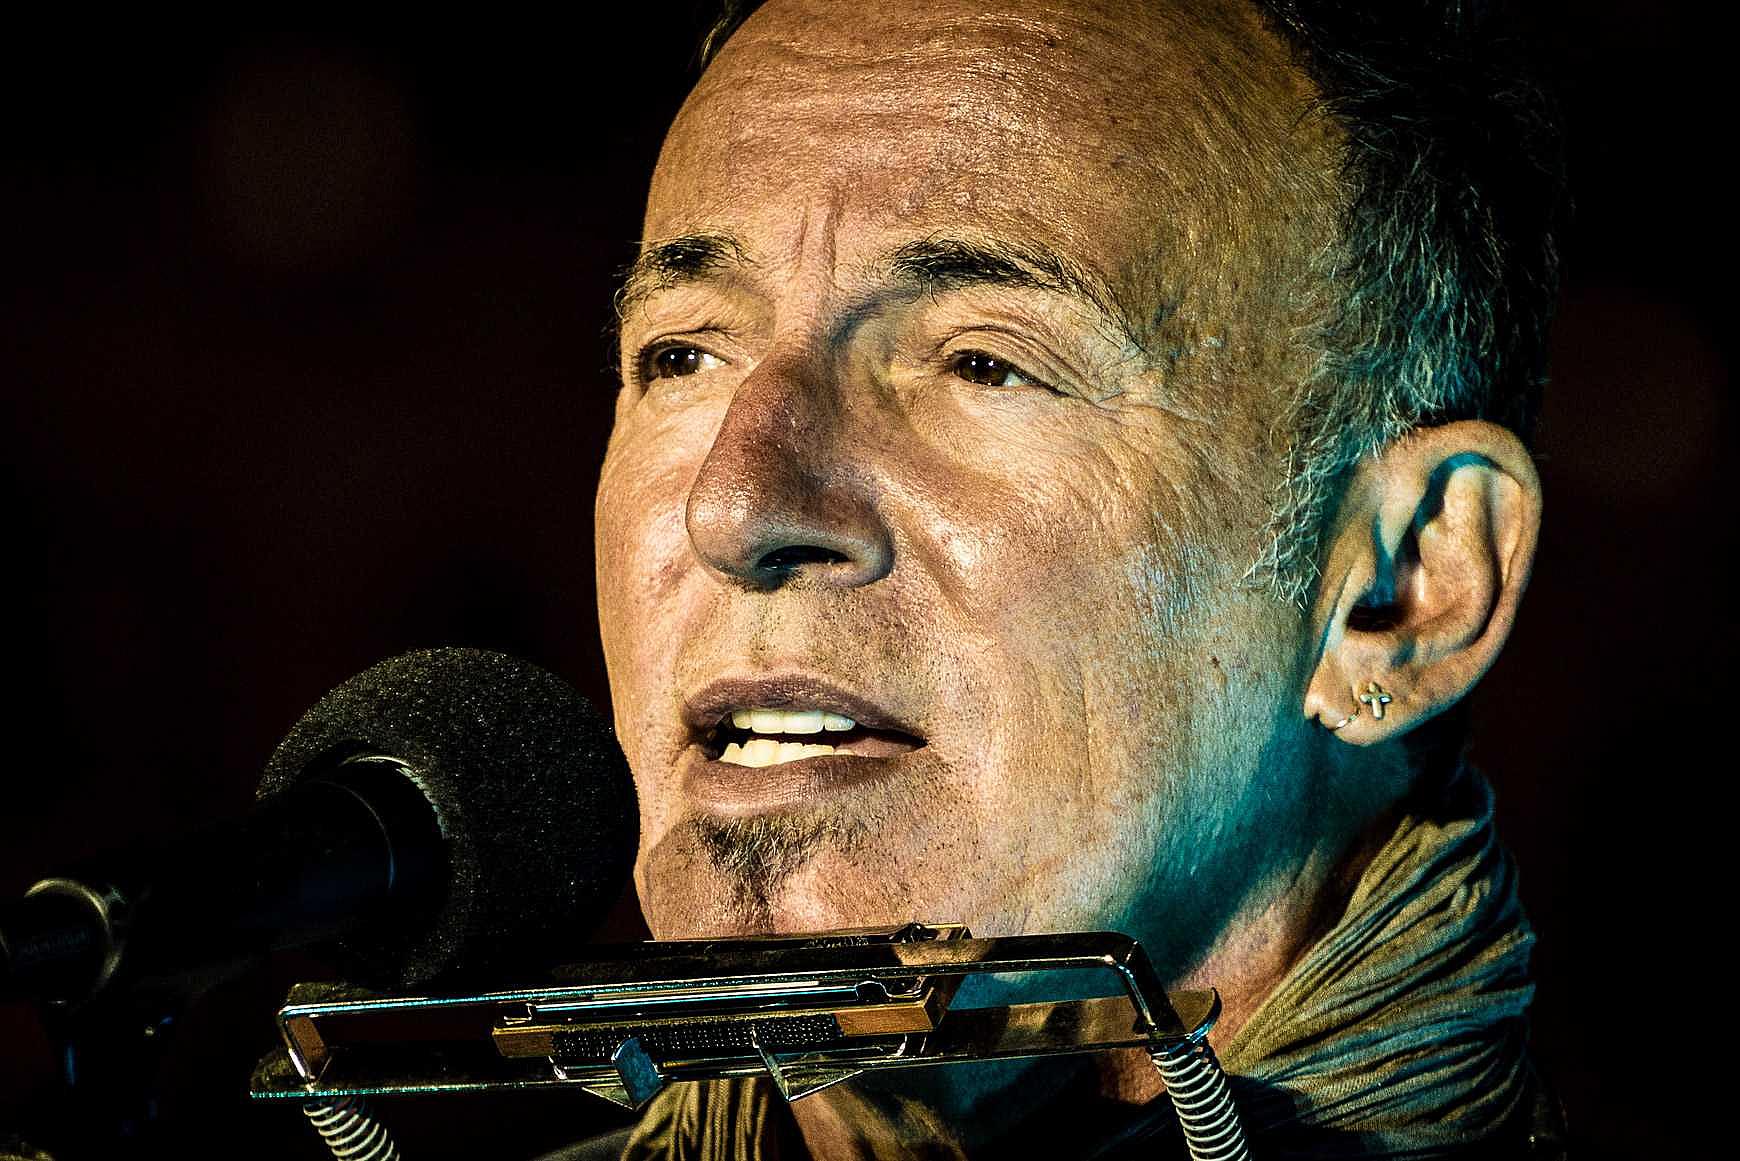 Bruce Springsteen close-up